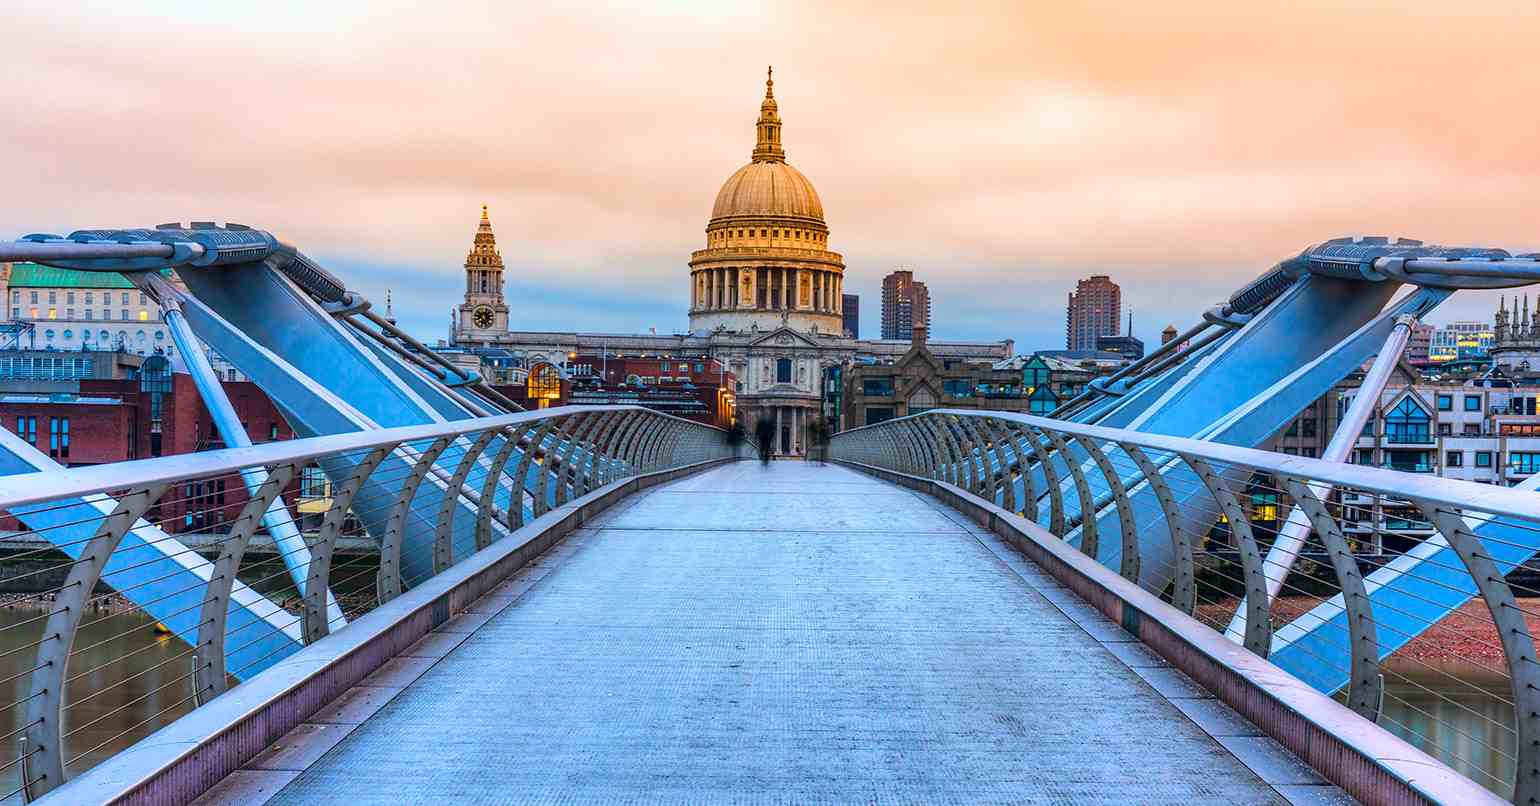 London Photography Spot - Millennium Bridge